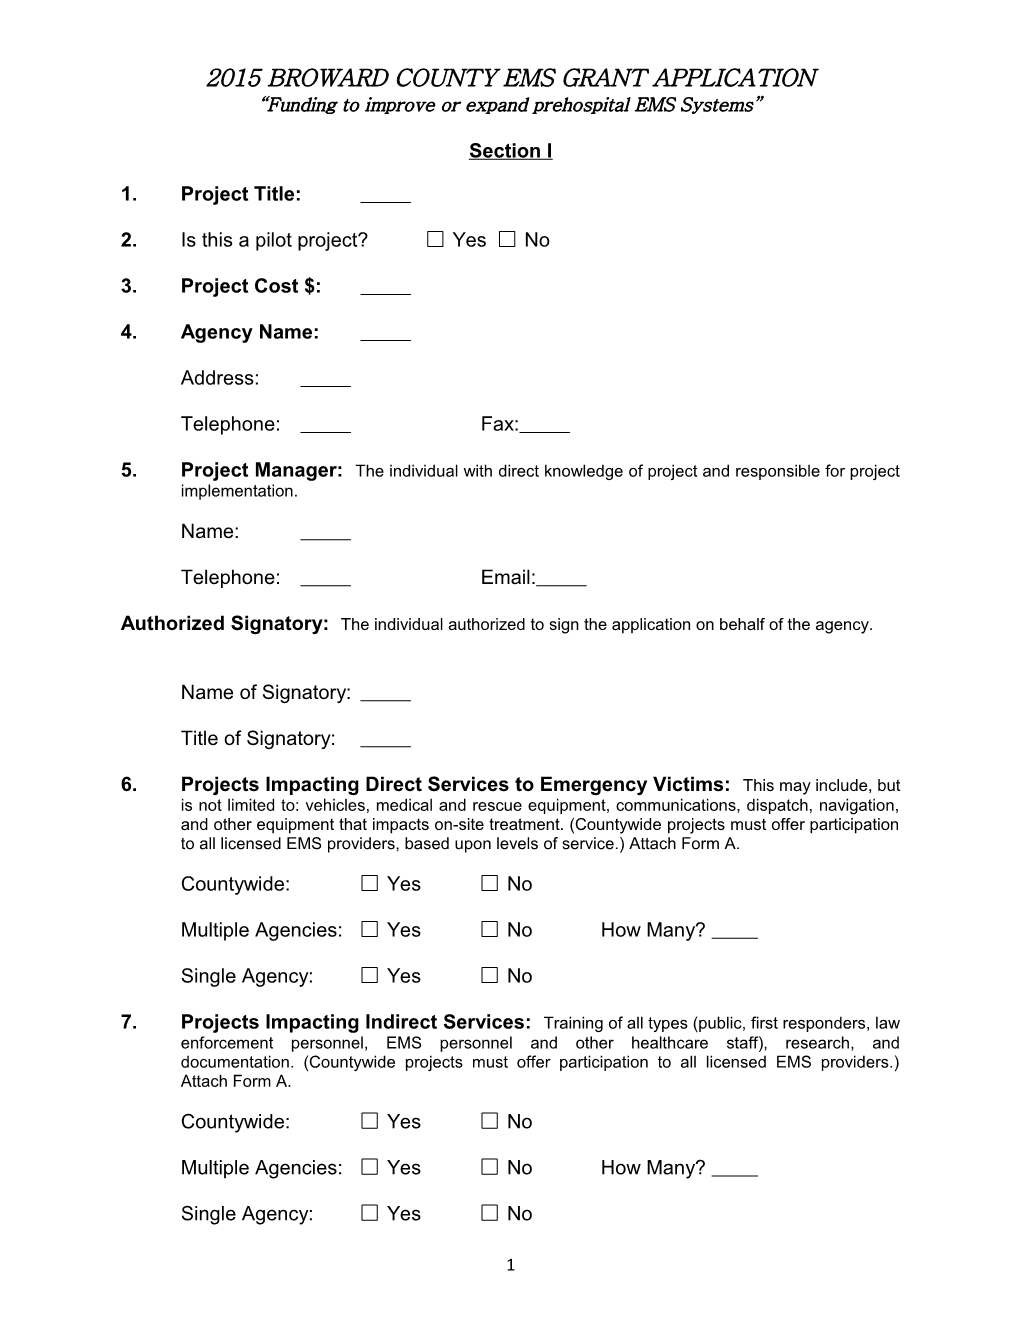 2015 Broward County EMS Grant Application